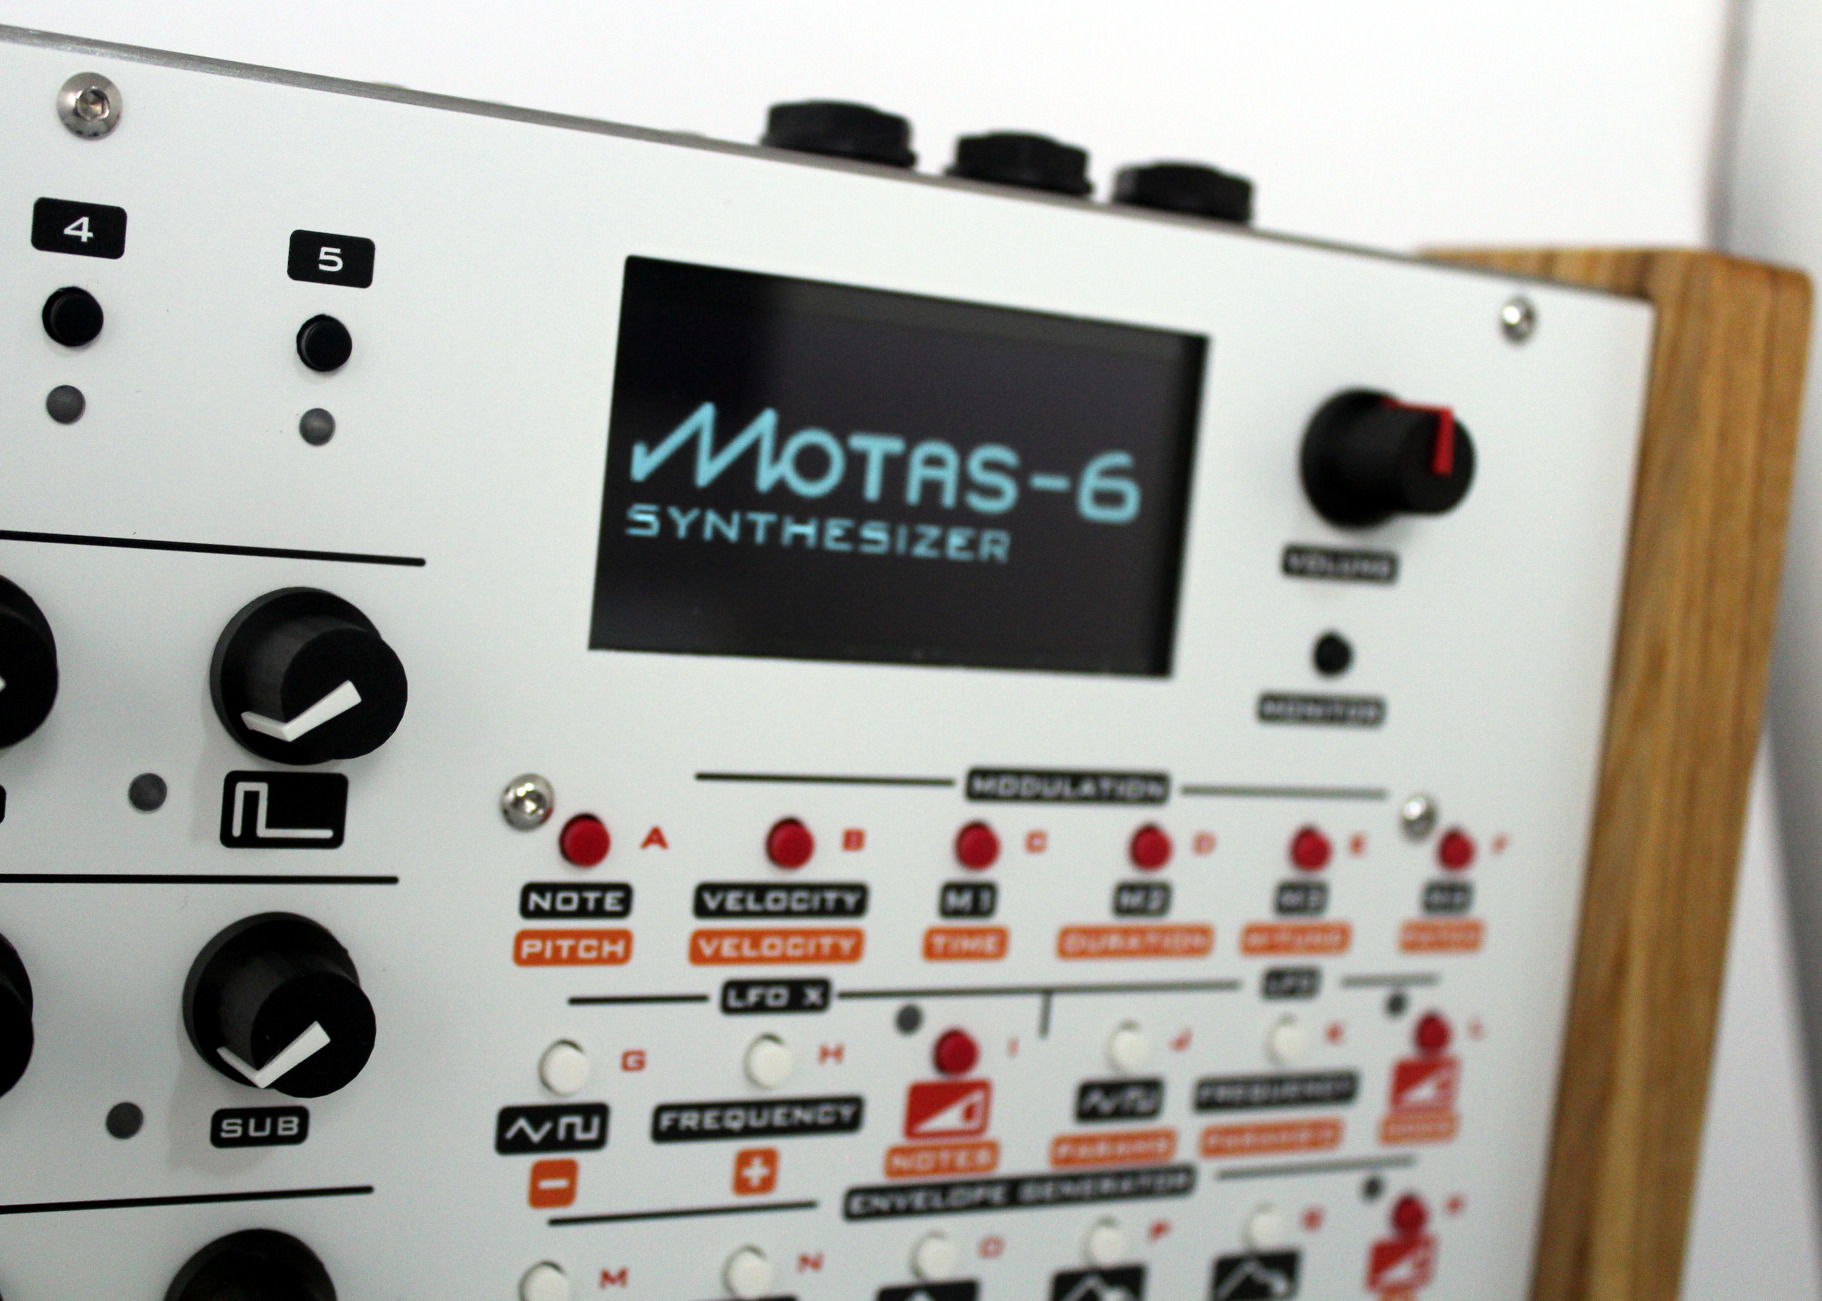 Motas-6 zoom showing OLED screen